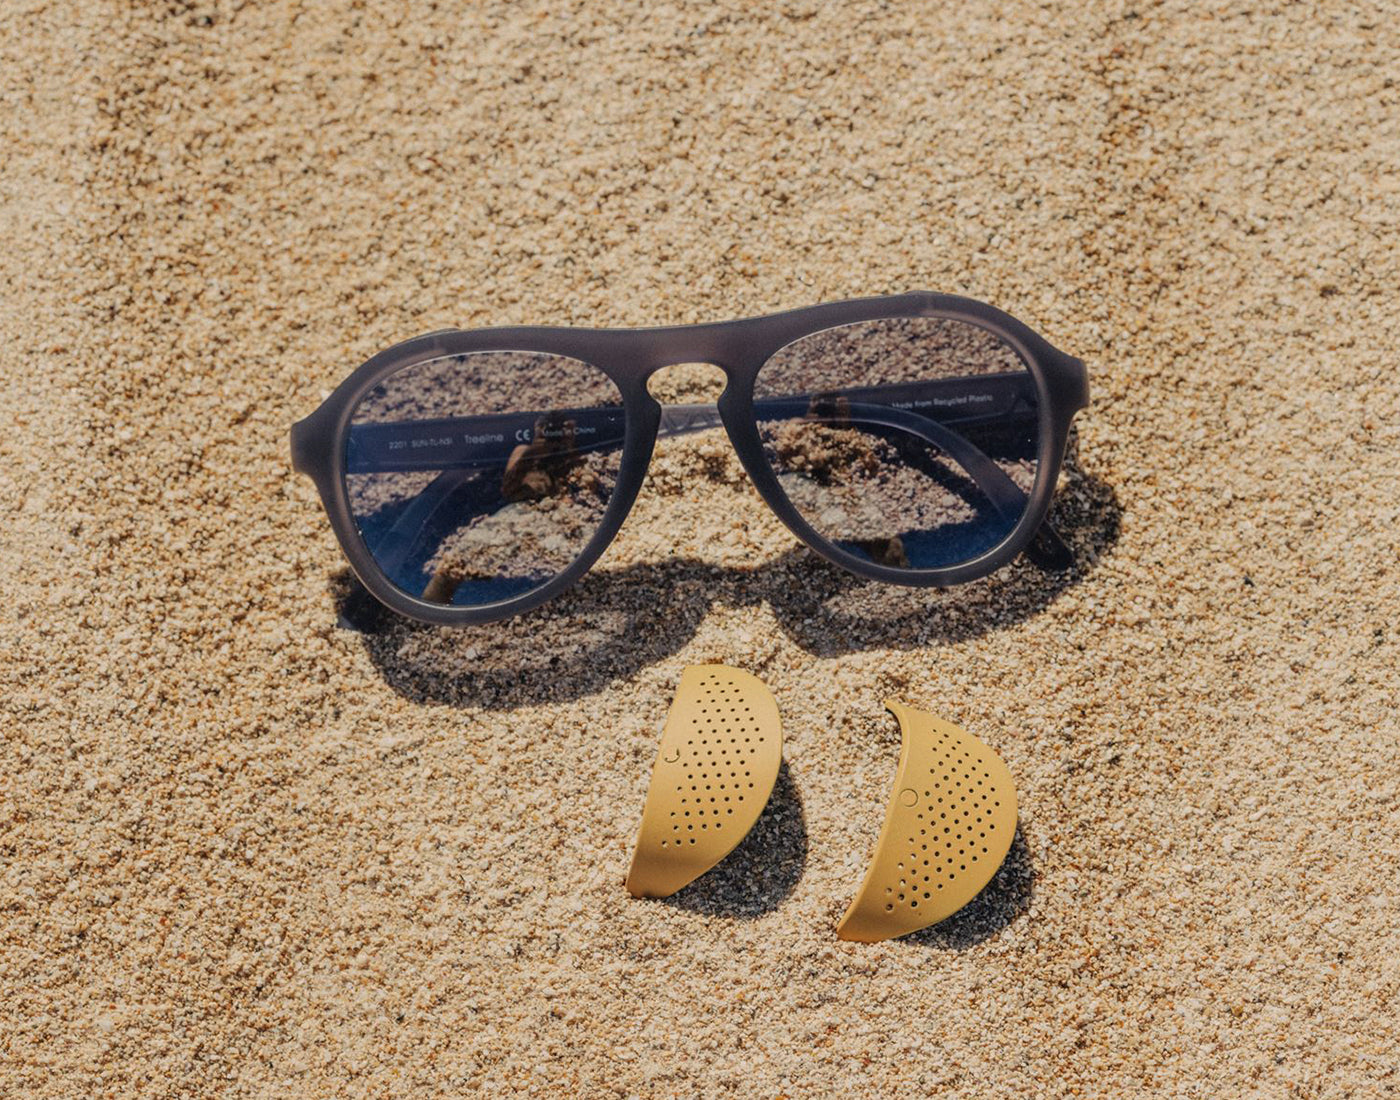 sunskit treeline sunglasses and sunski treeline sun shields in the sand